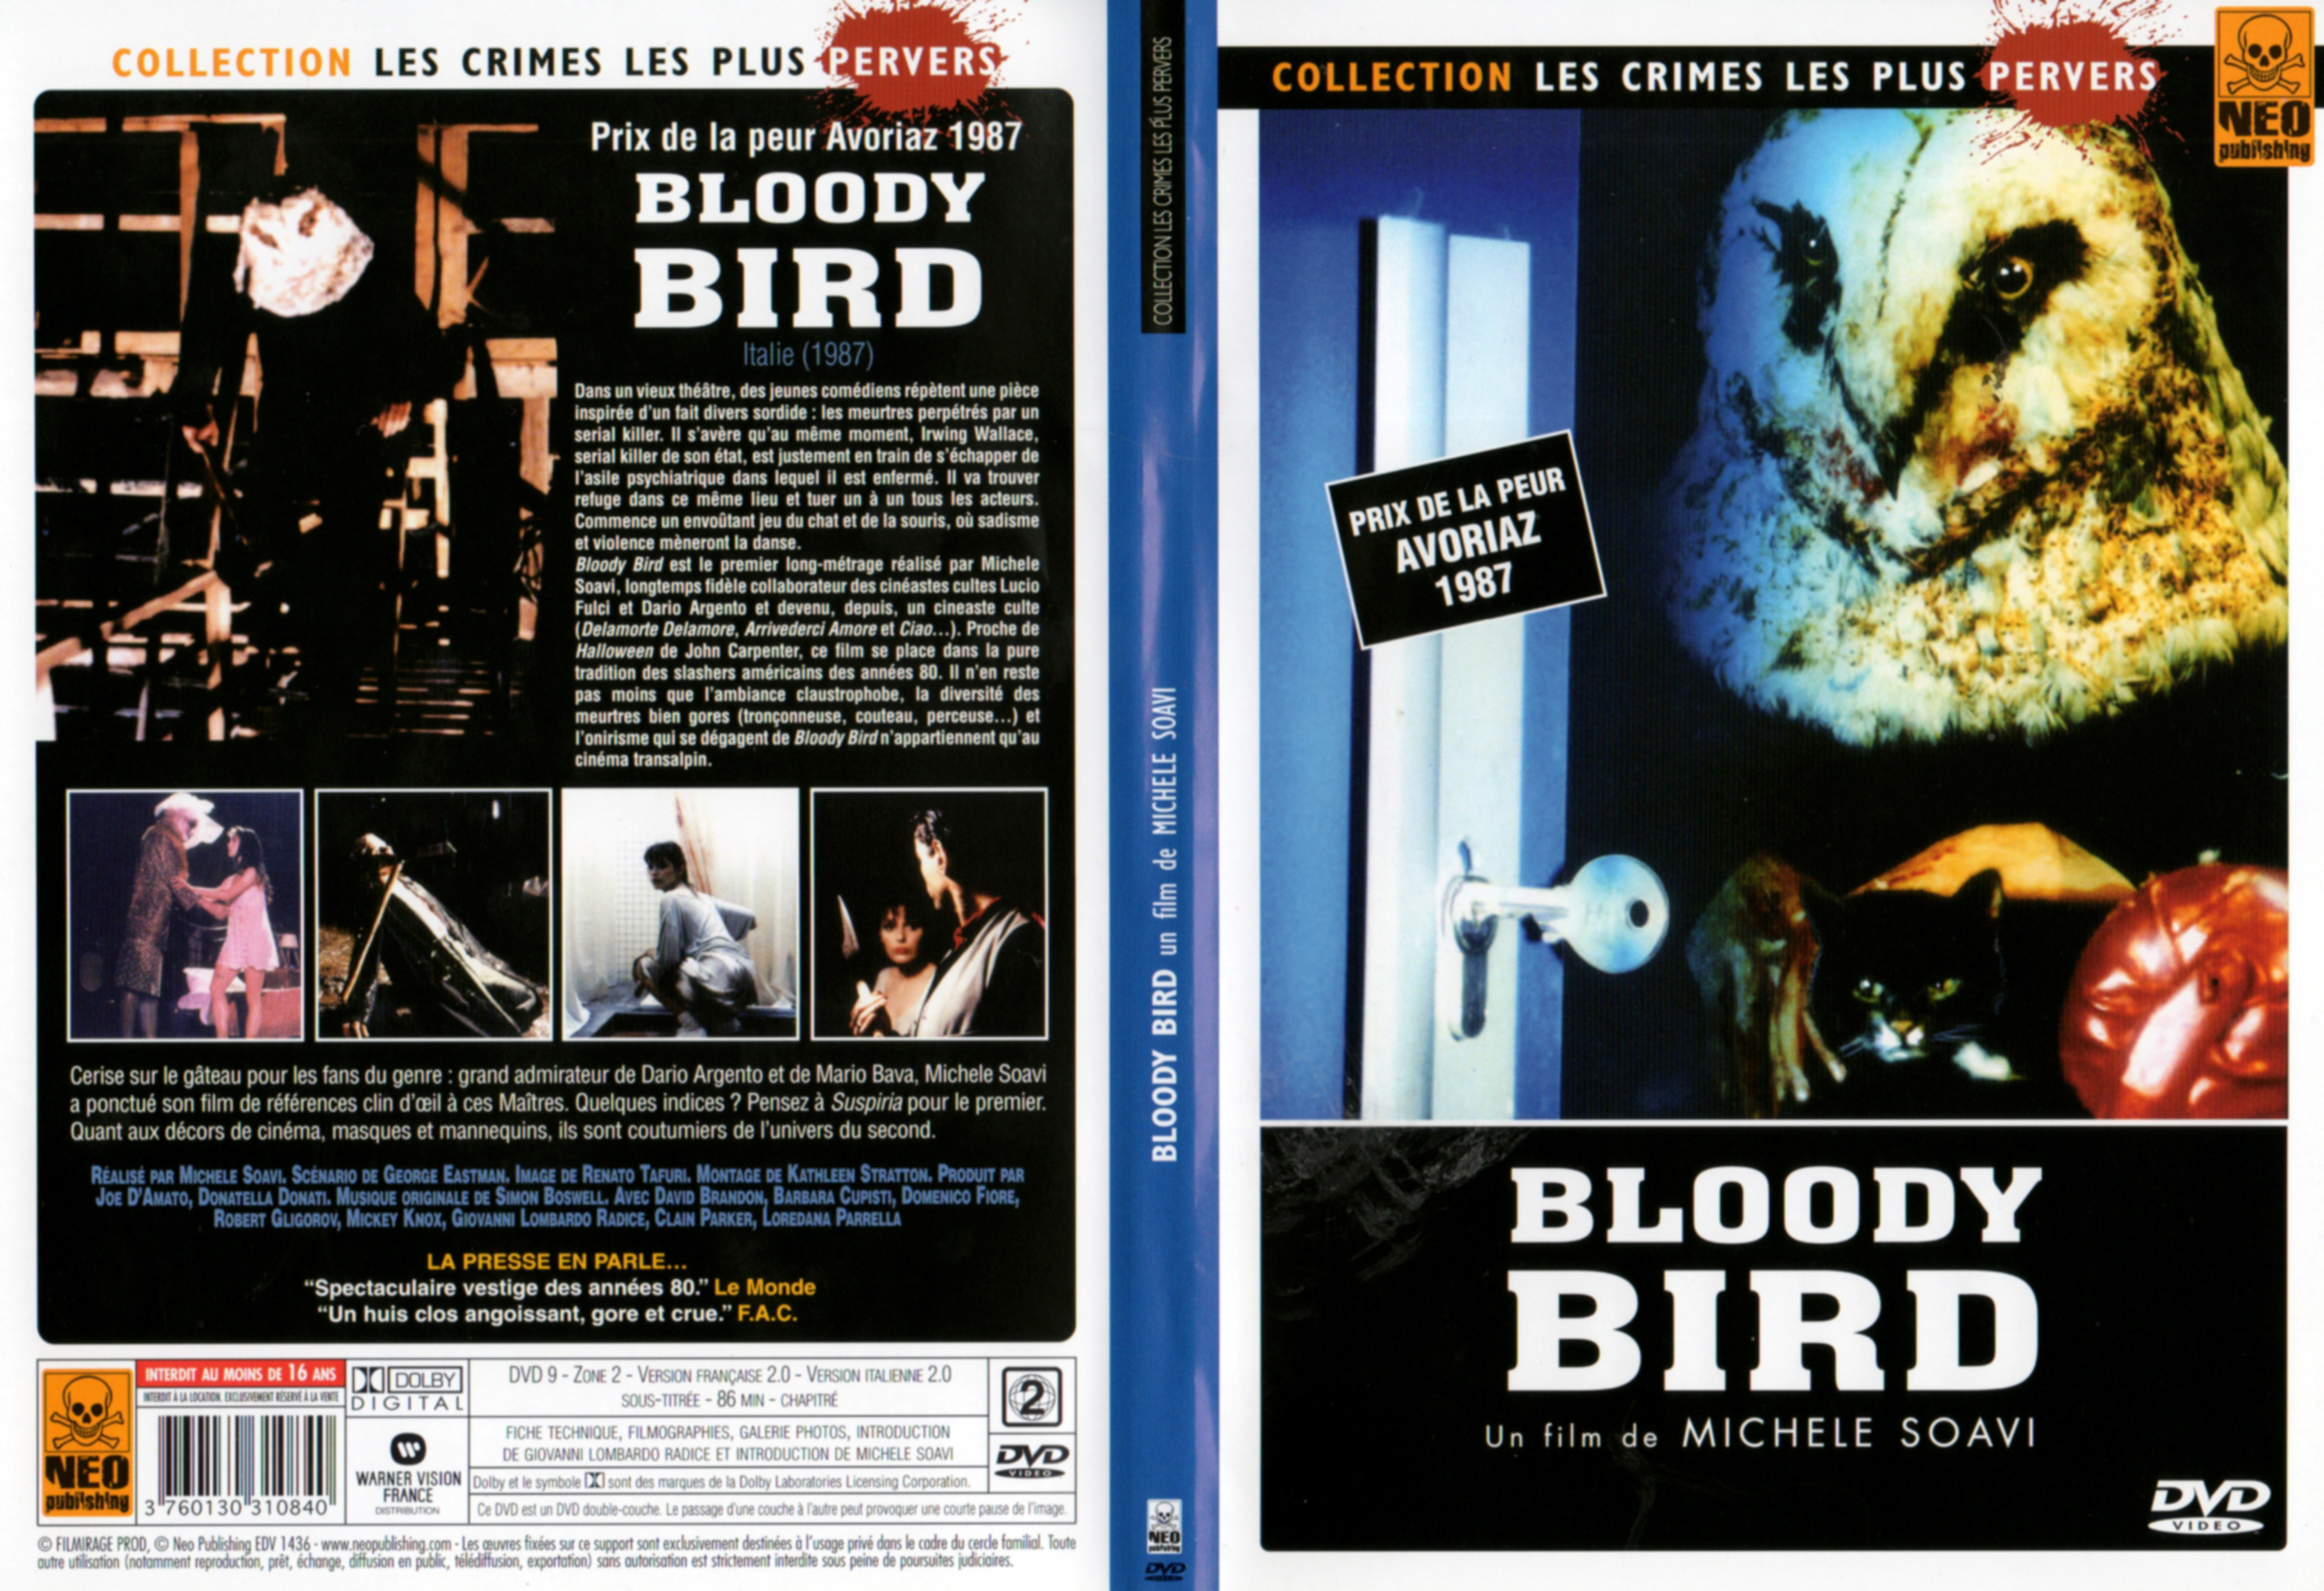 Jaquette DVD Bloody bird v2